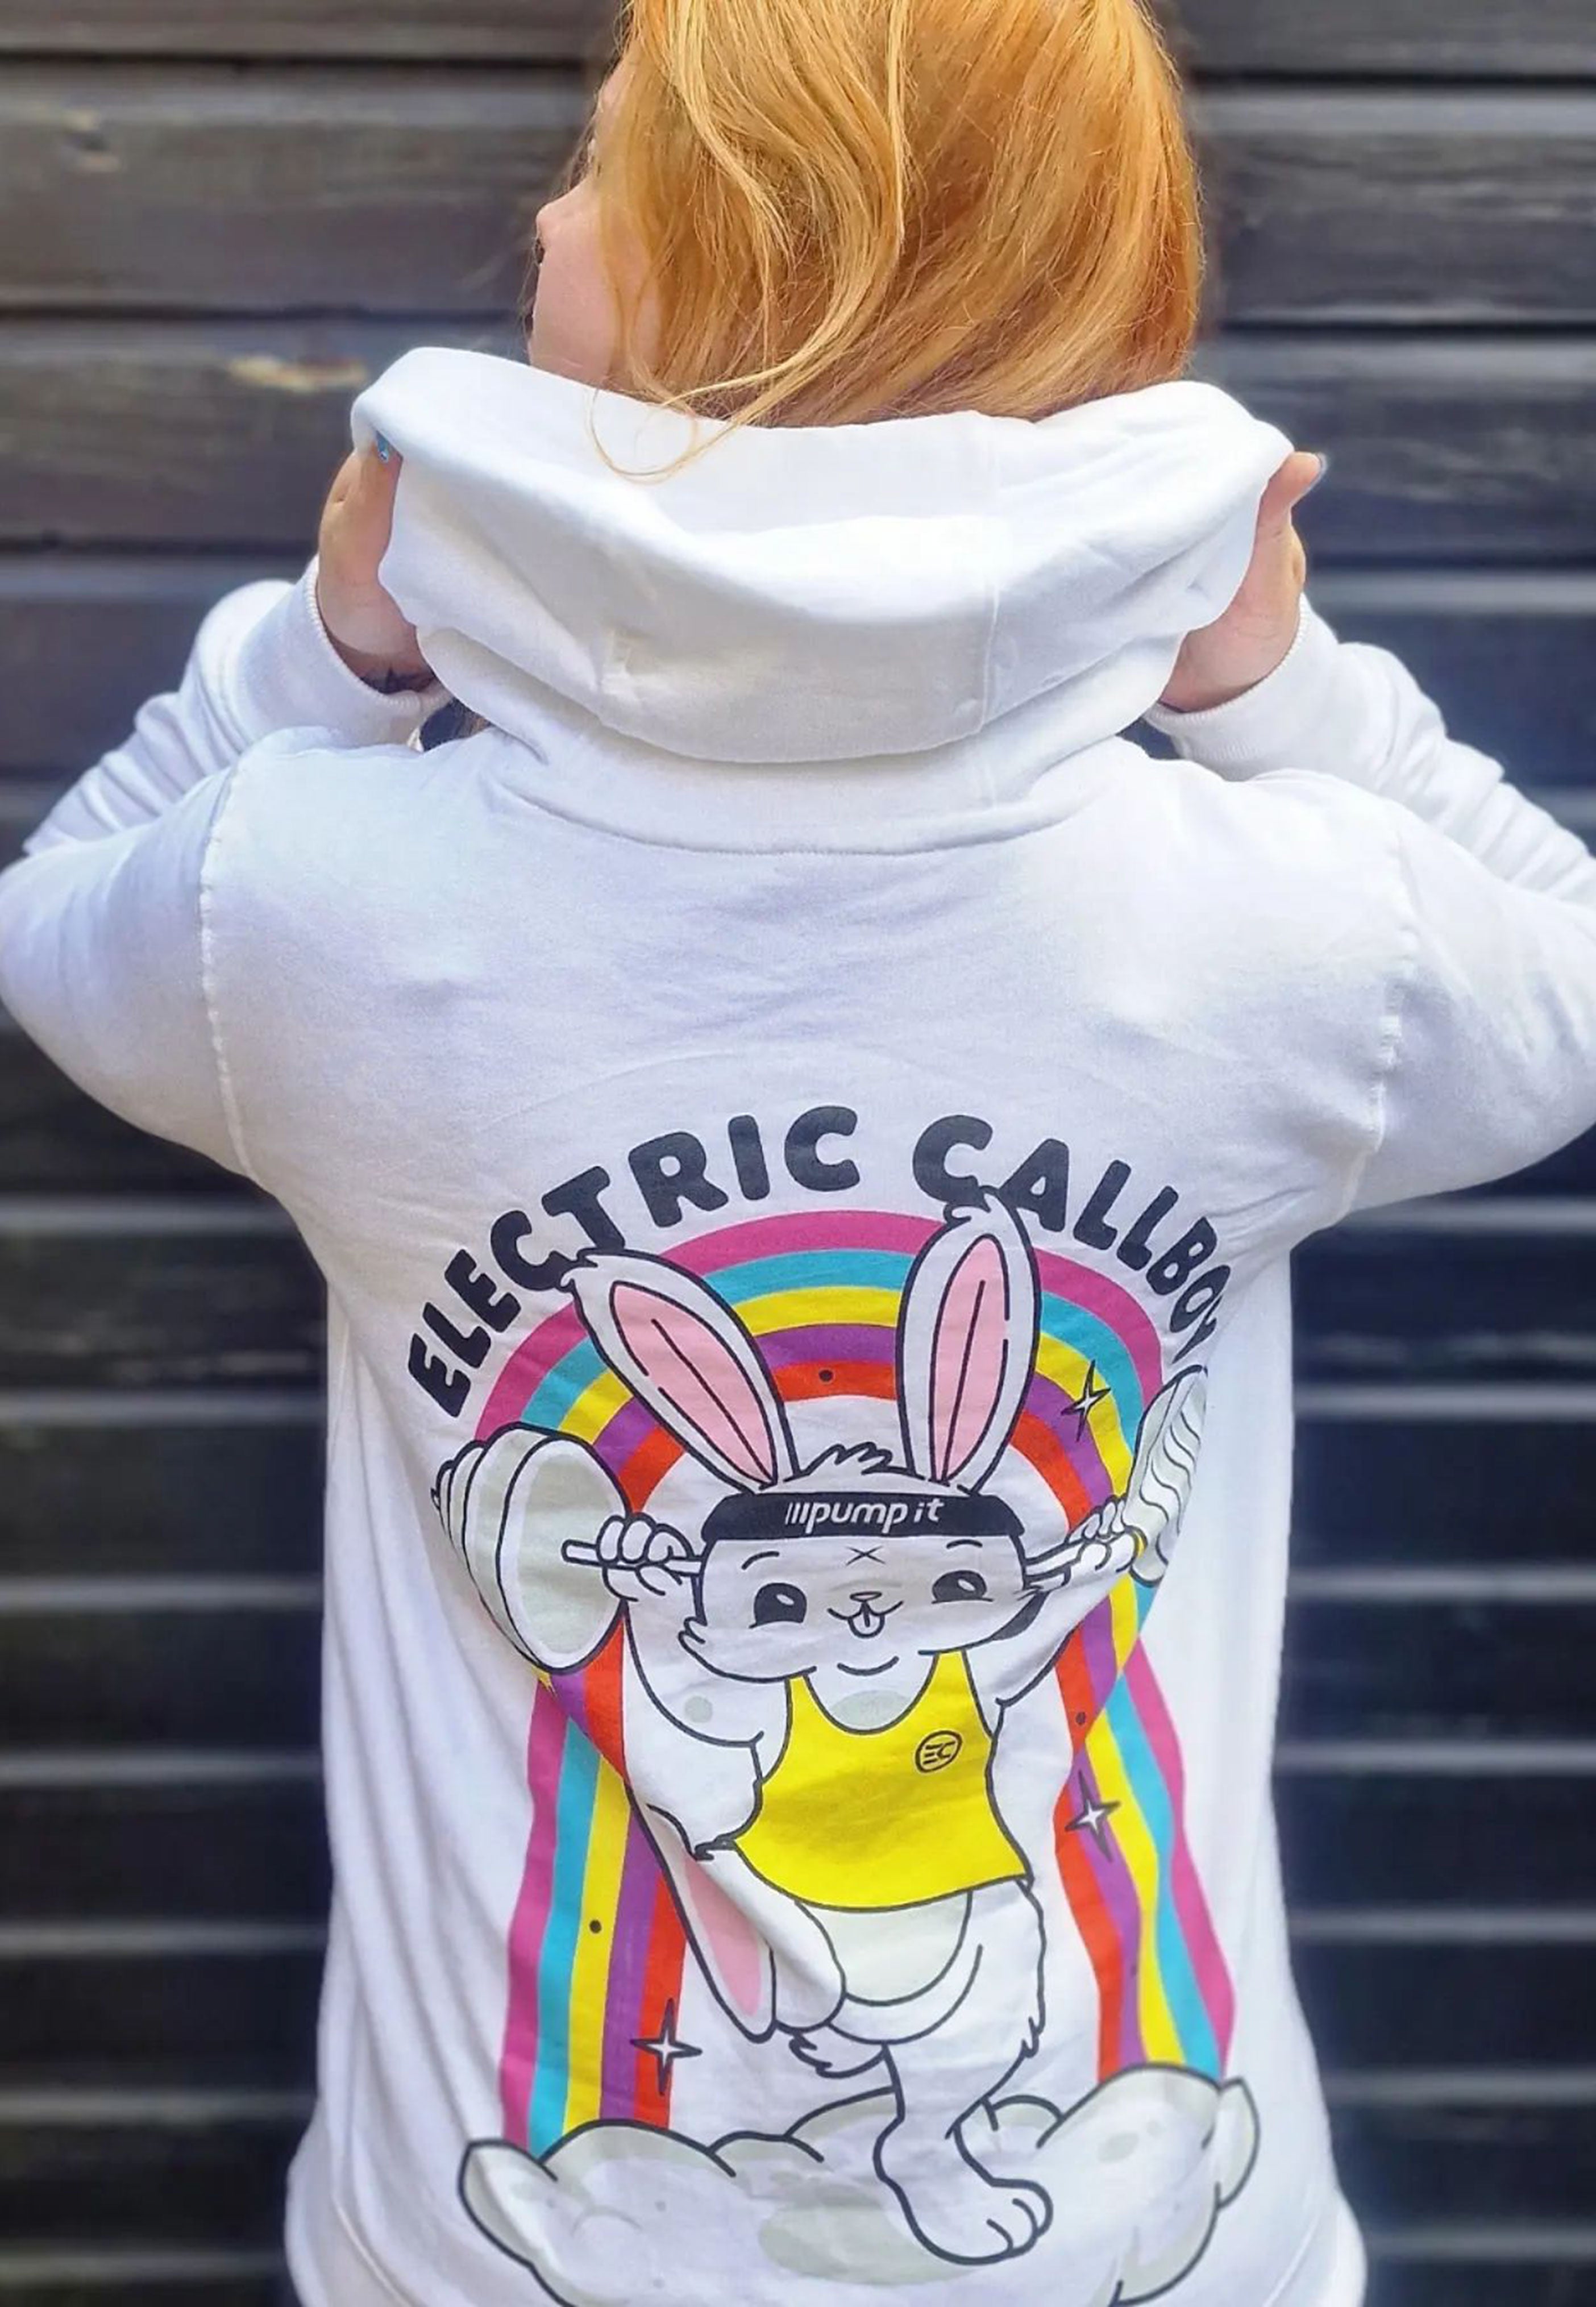 Electric Callboy - Pump It Bunny - Hoodie | Women-Image